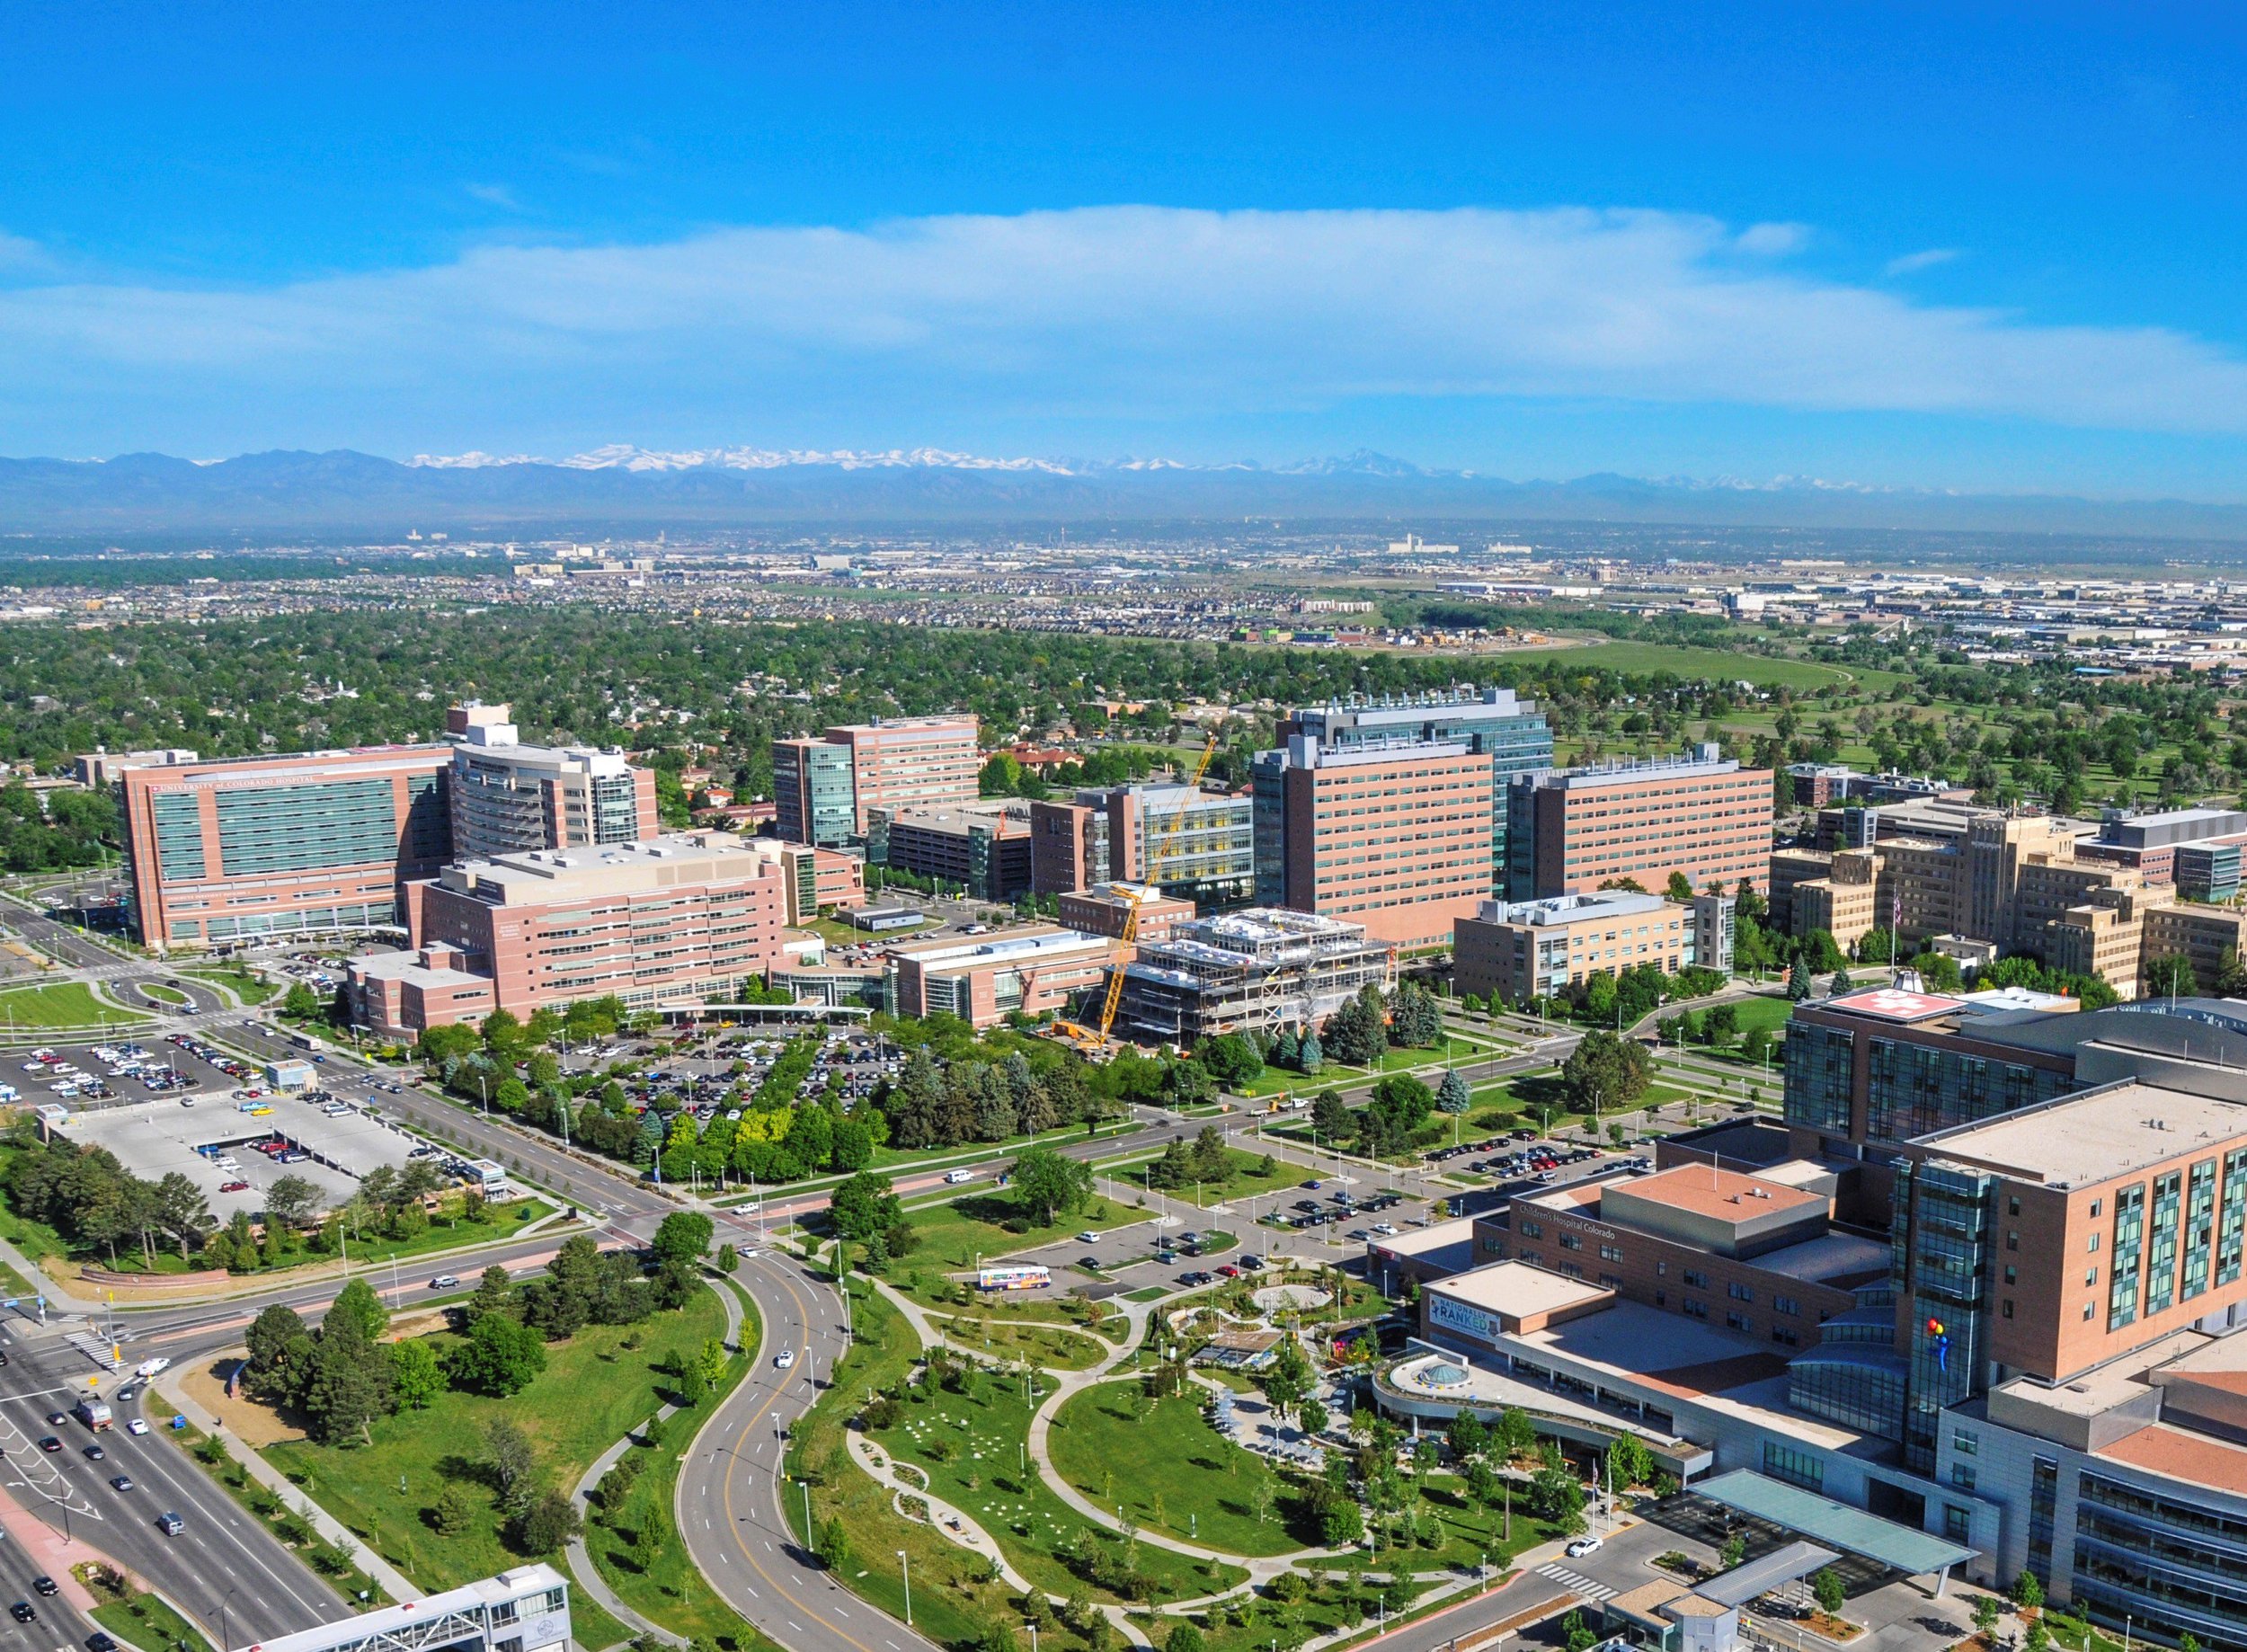 Testicular Cancer Conference Denver 2018 at University of Colorado Hospital